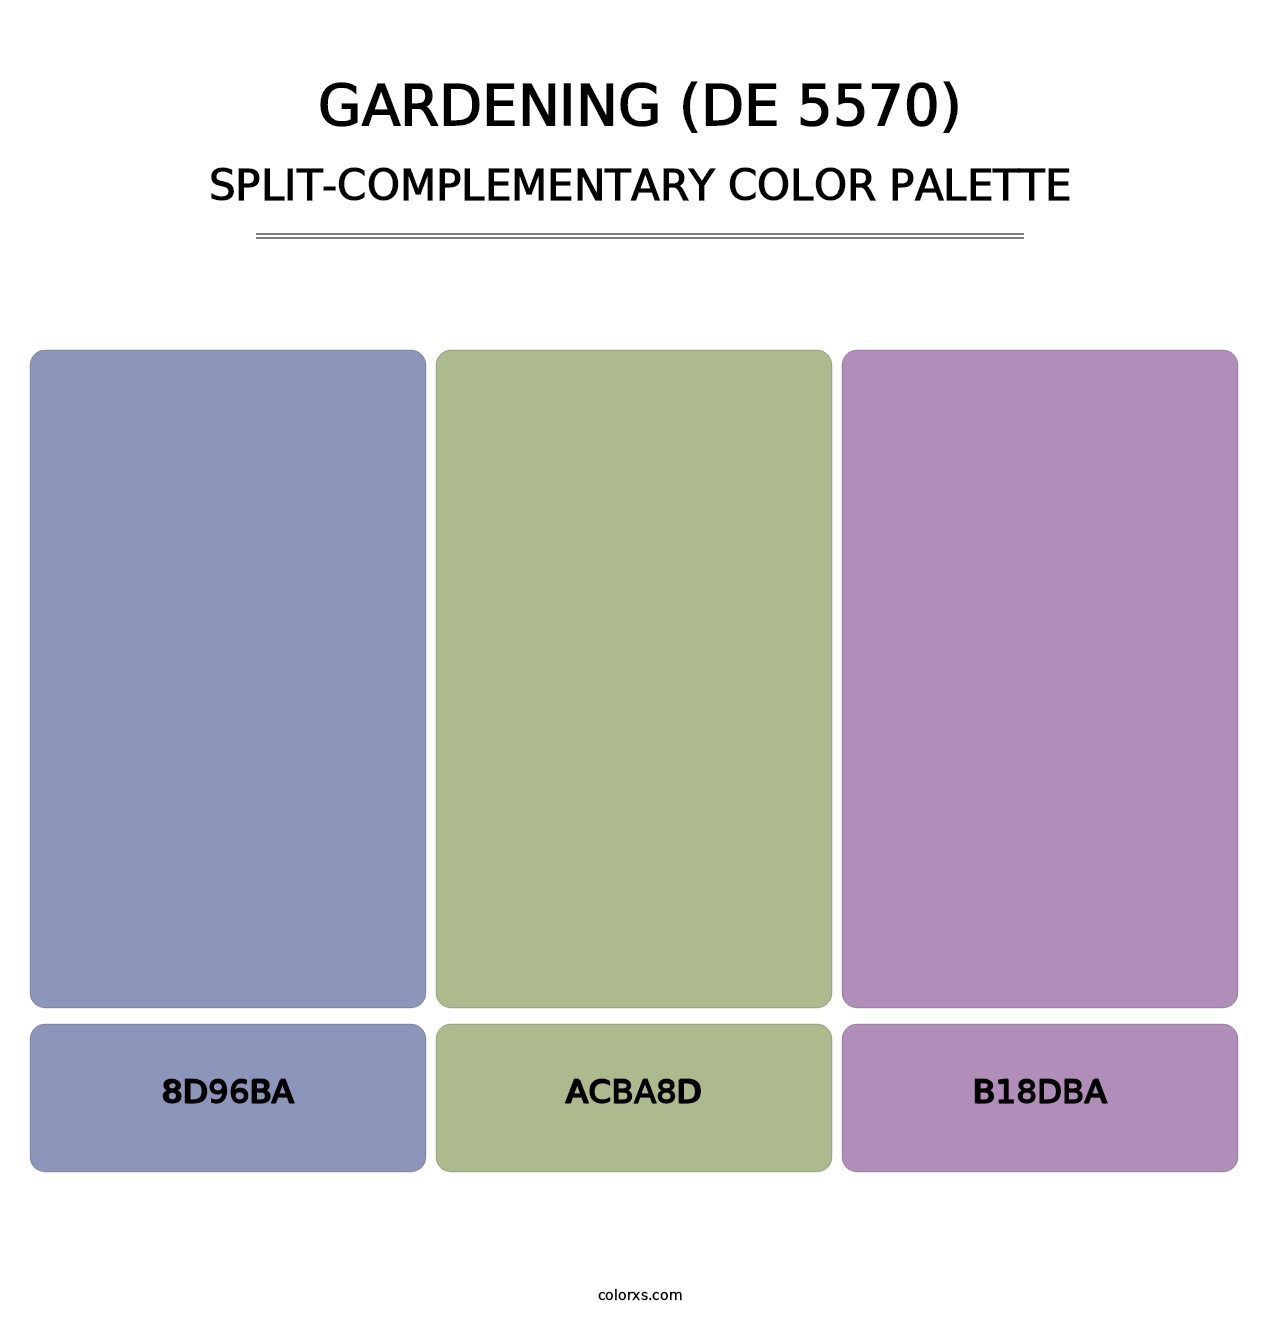 Gardening (DE 5570) - Split-Complementary Color Palette